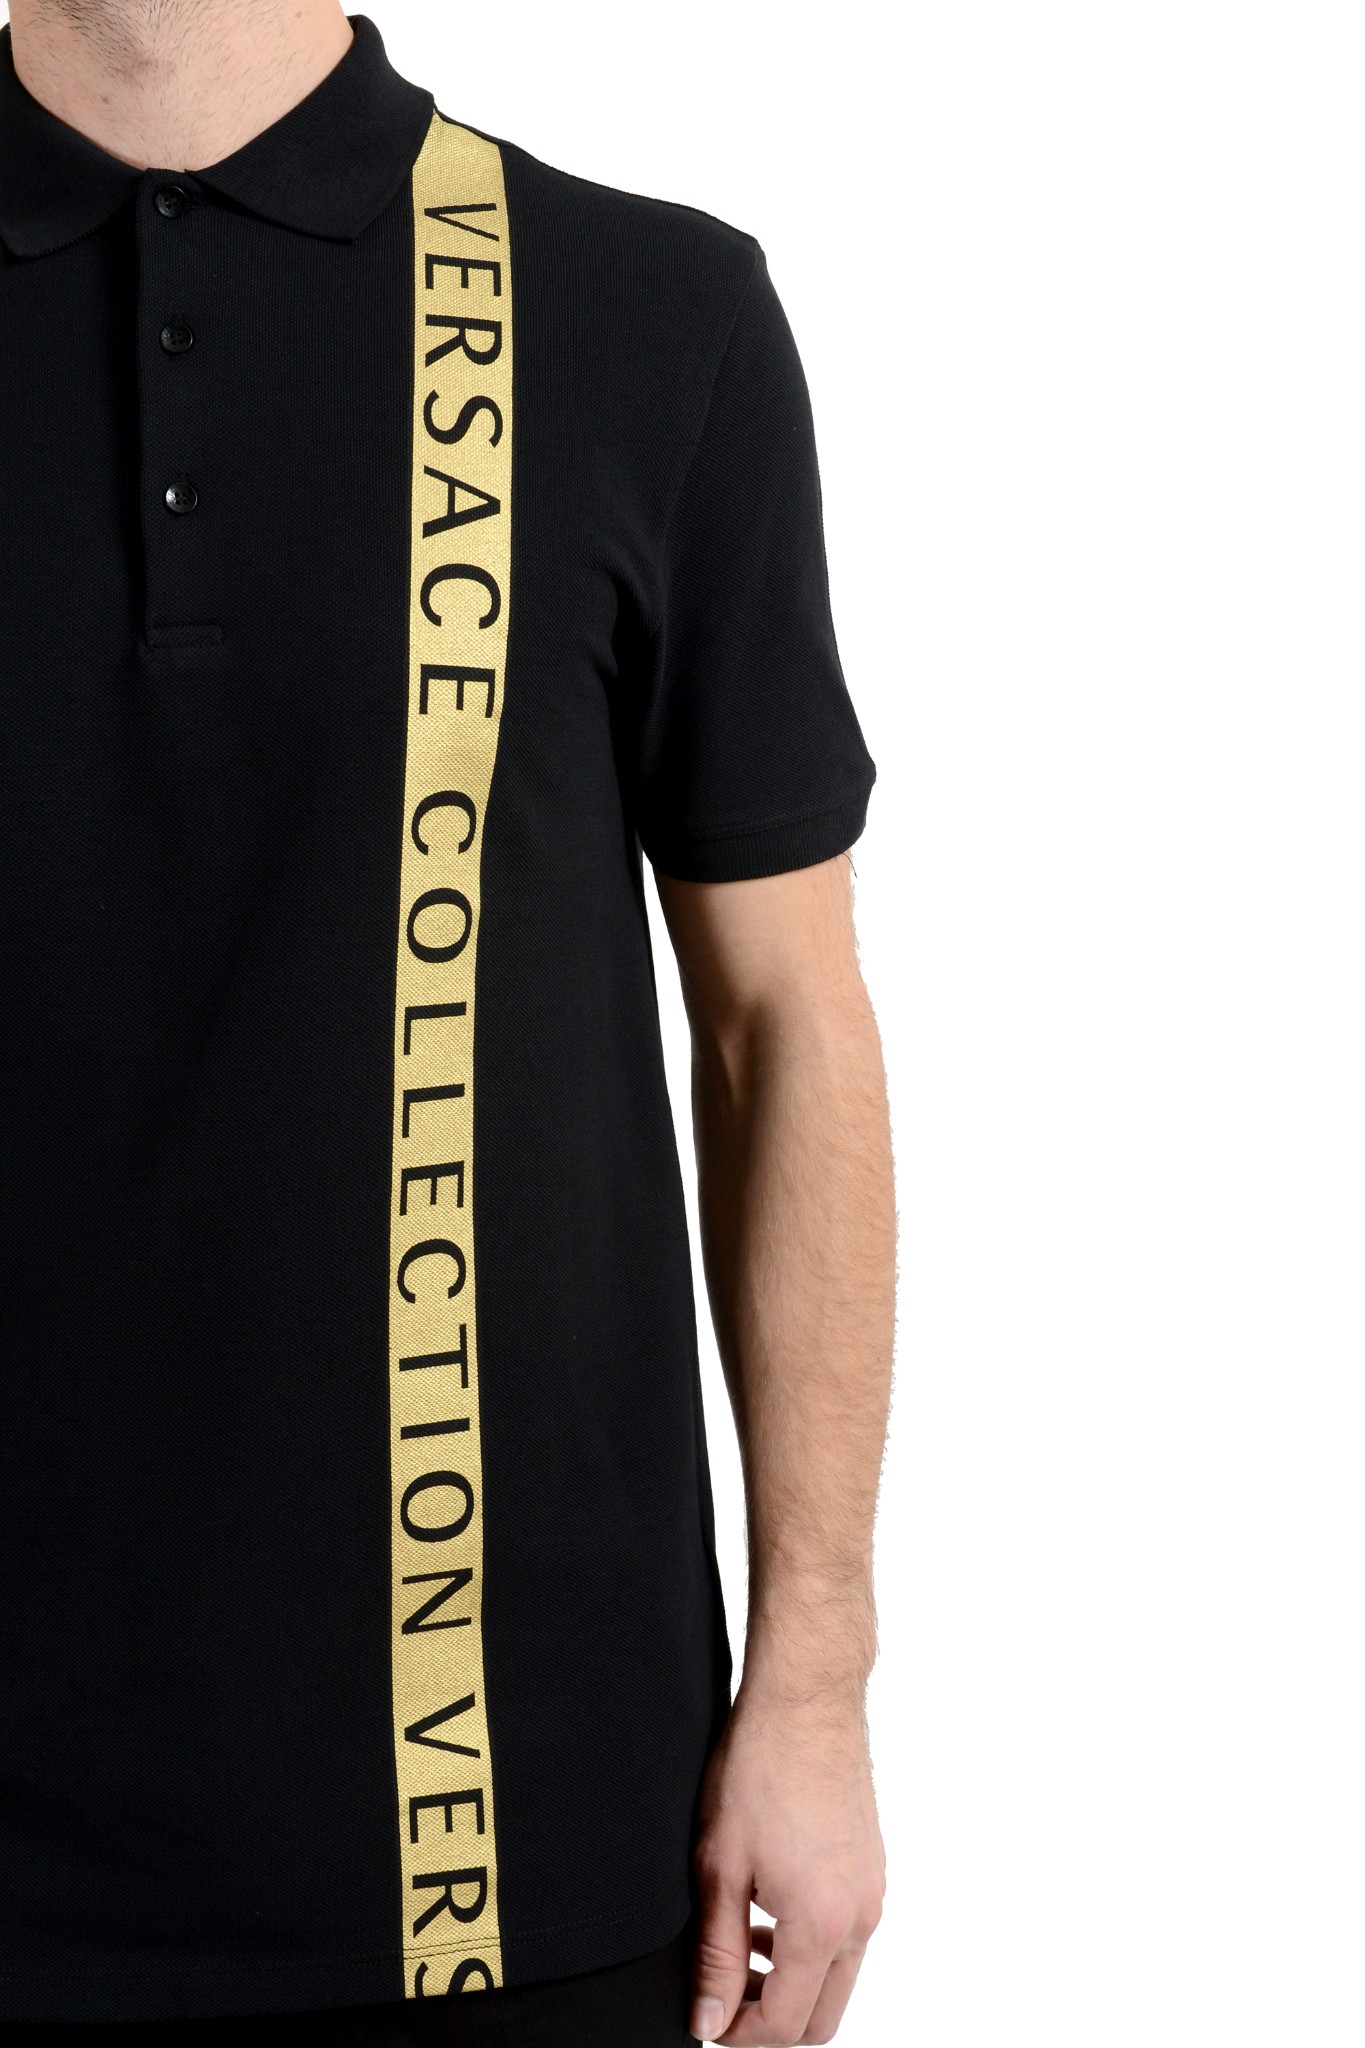 versace collection polo shirt mens